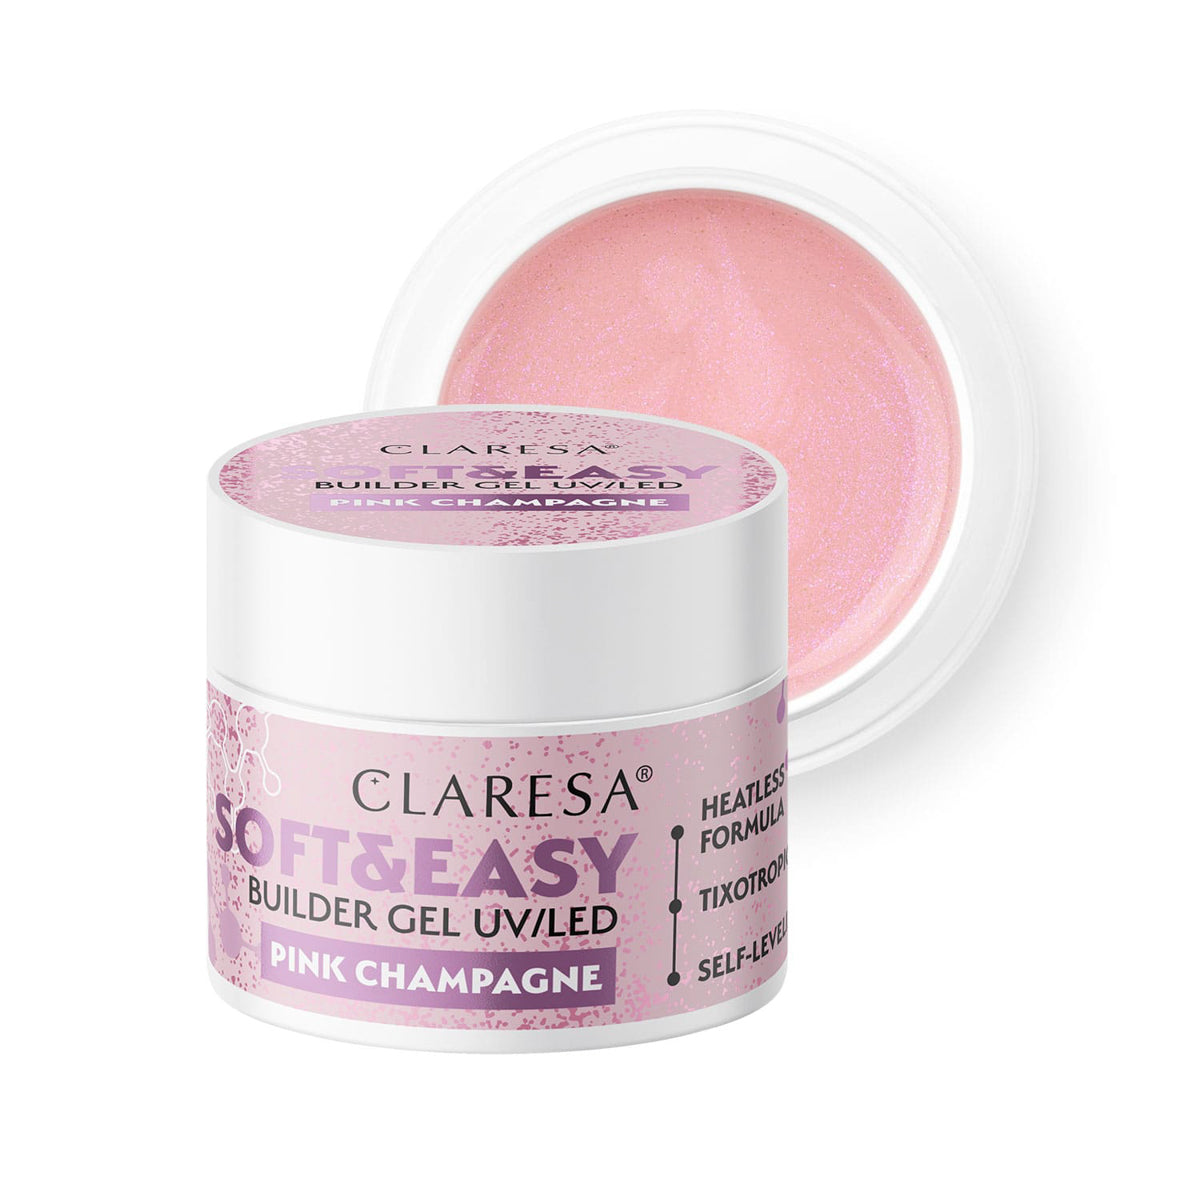 Claresa Soft&Easy bouwgel roze champagne 12g